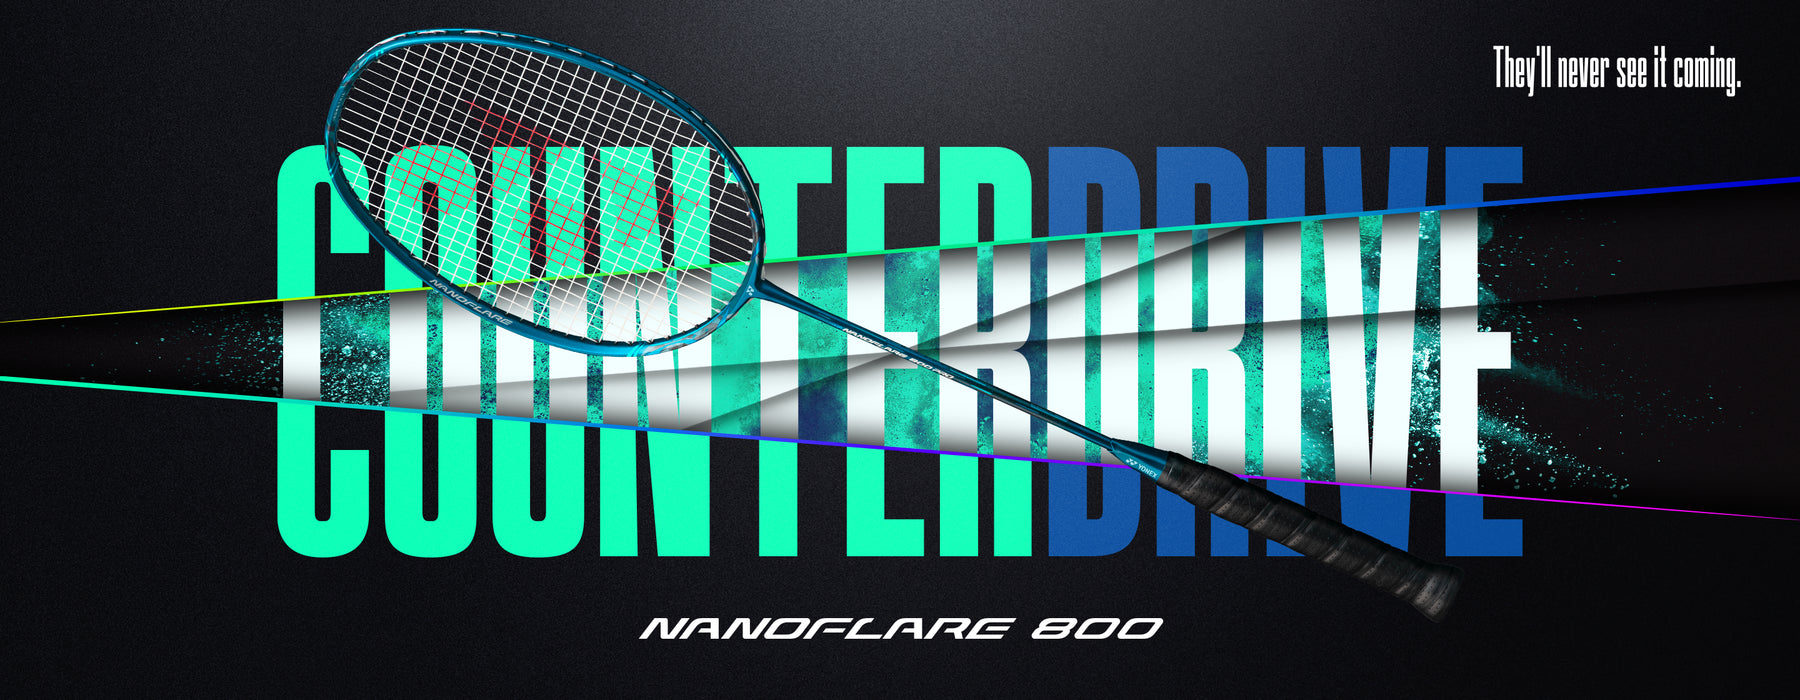 Nanoflare 800 Pro Badminton Racket - Powerful and fast!